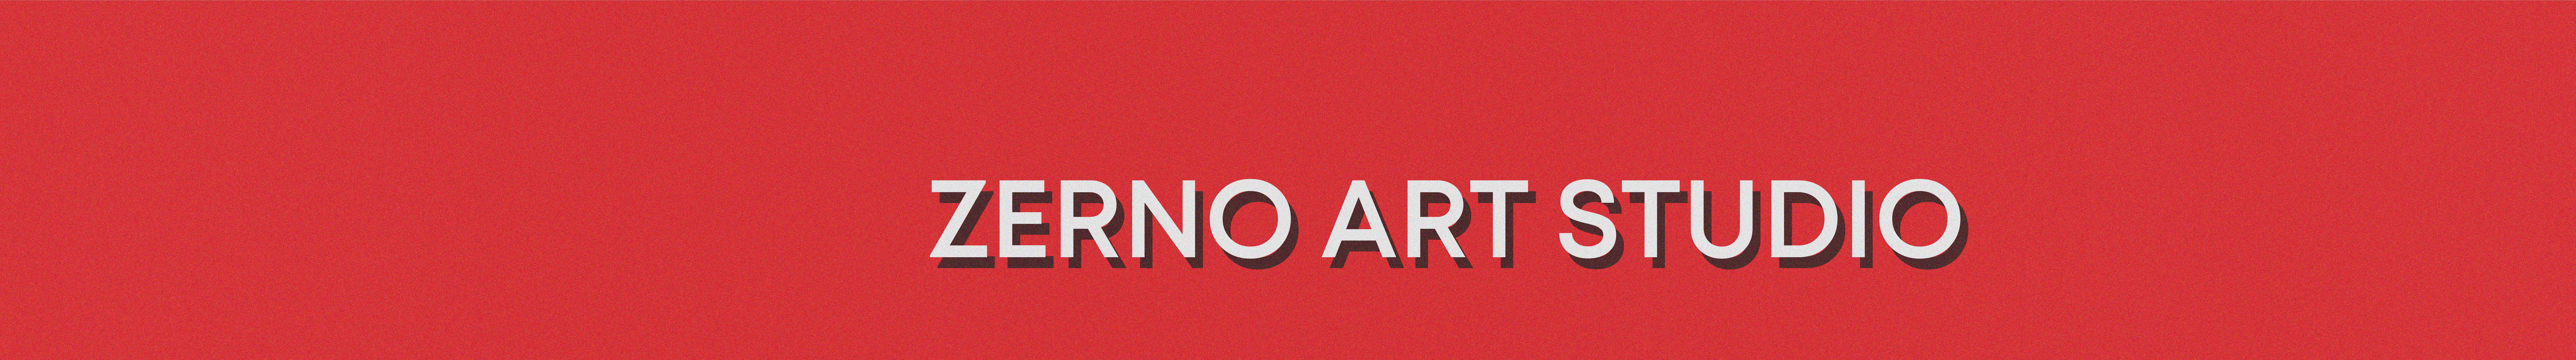 ZERNO ART STUDIO's profile banner